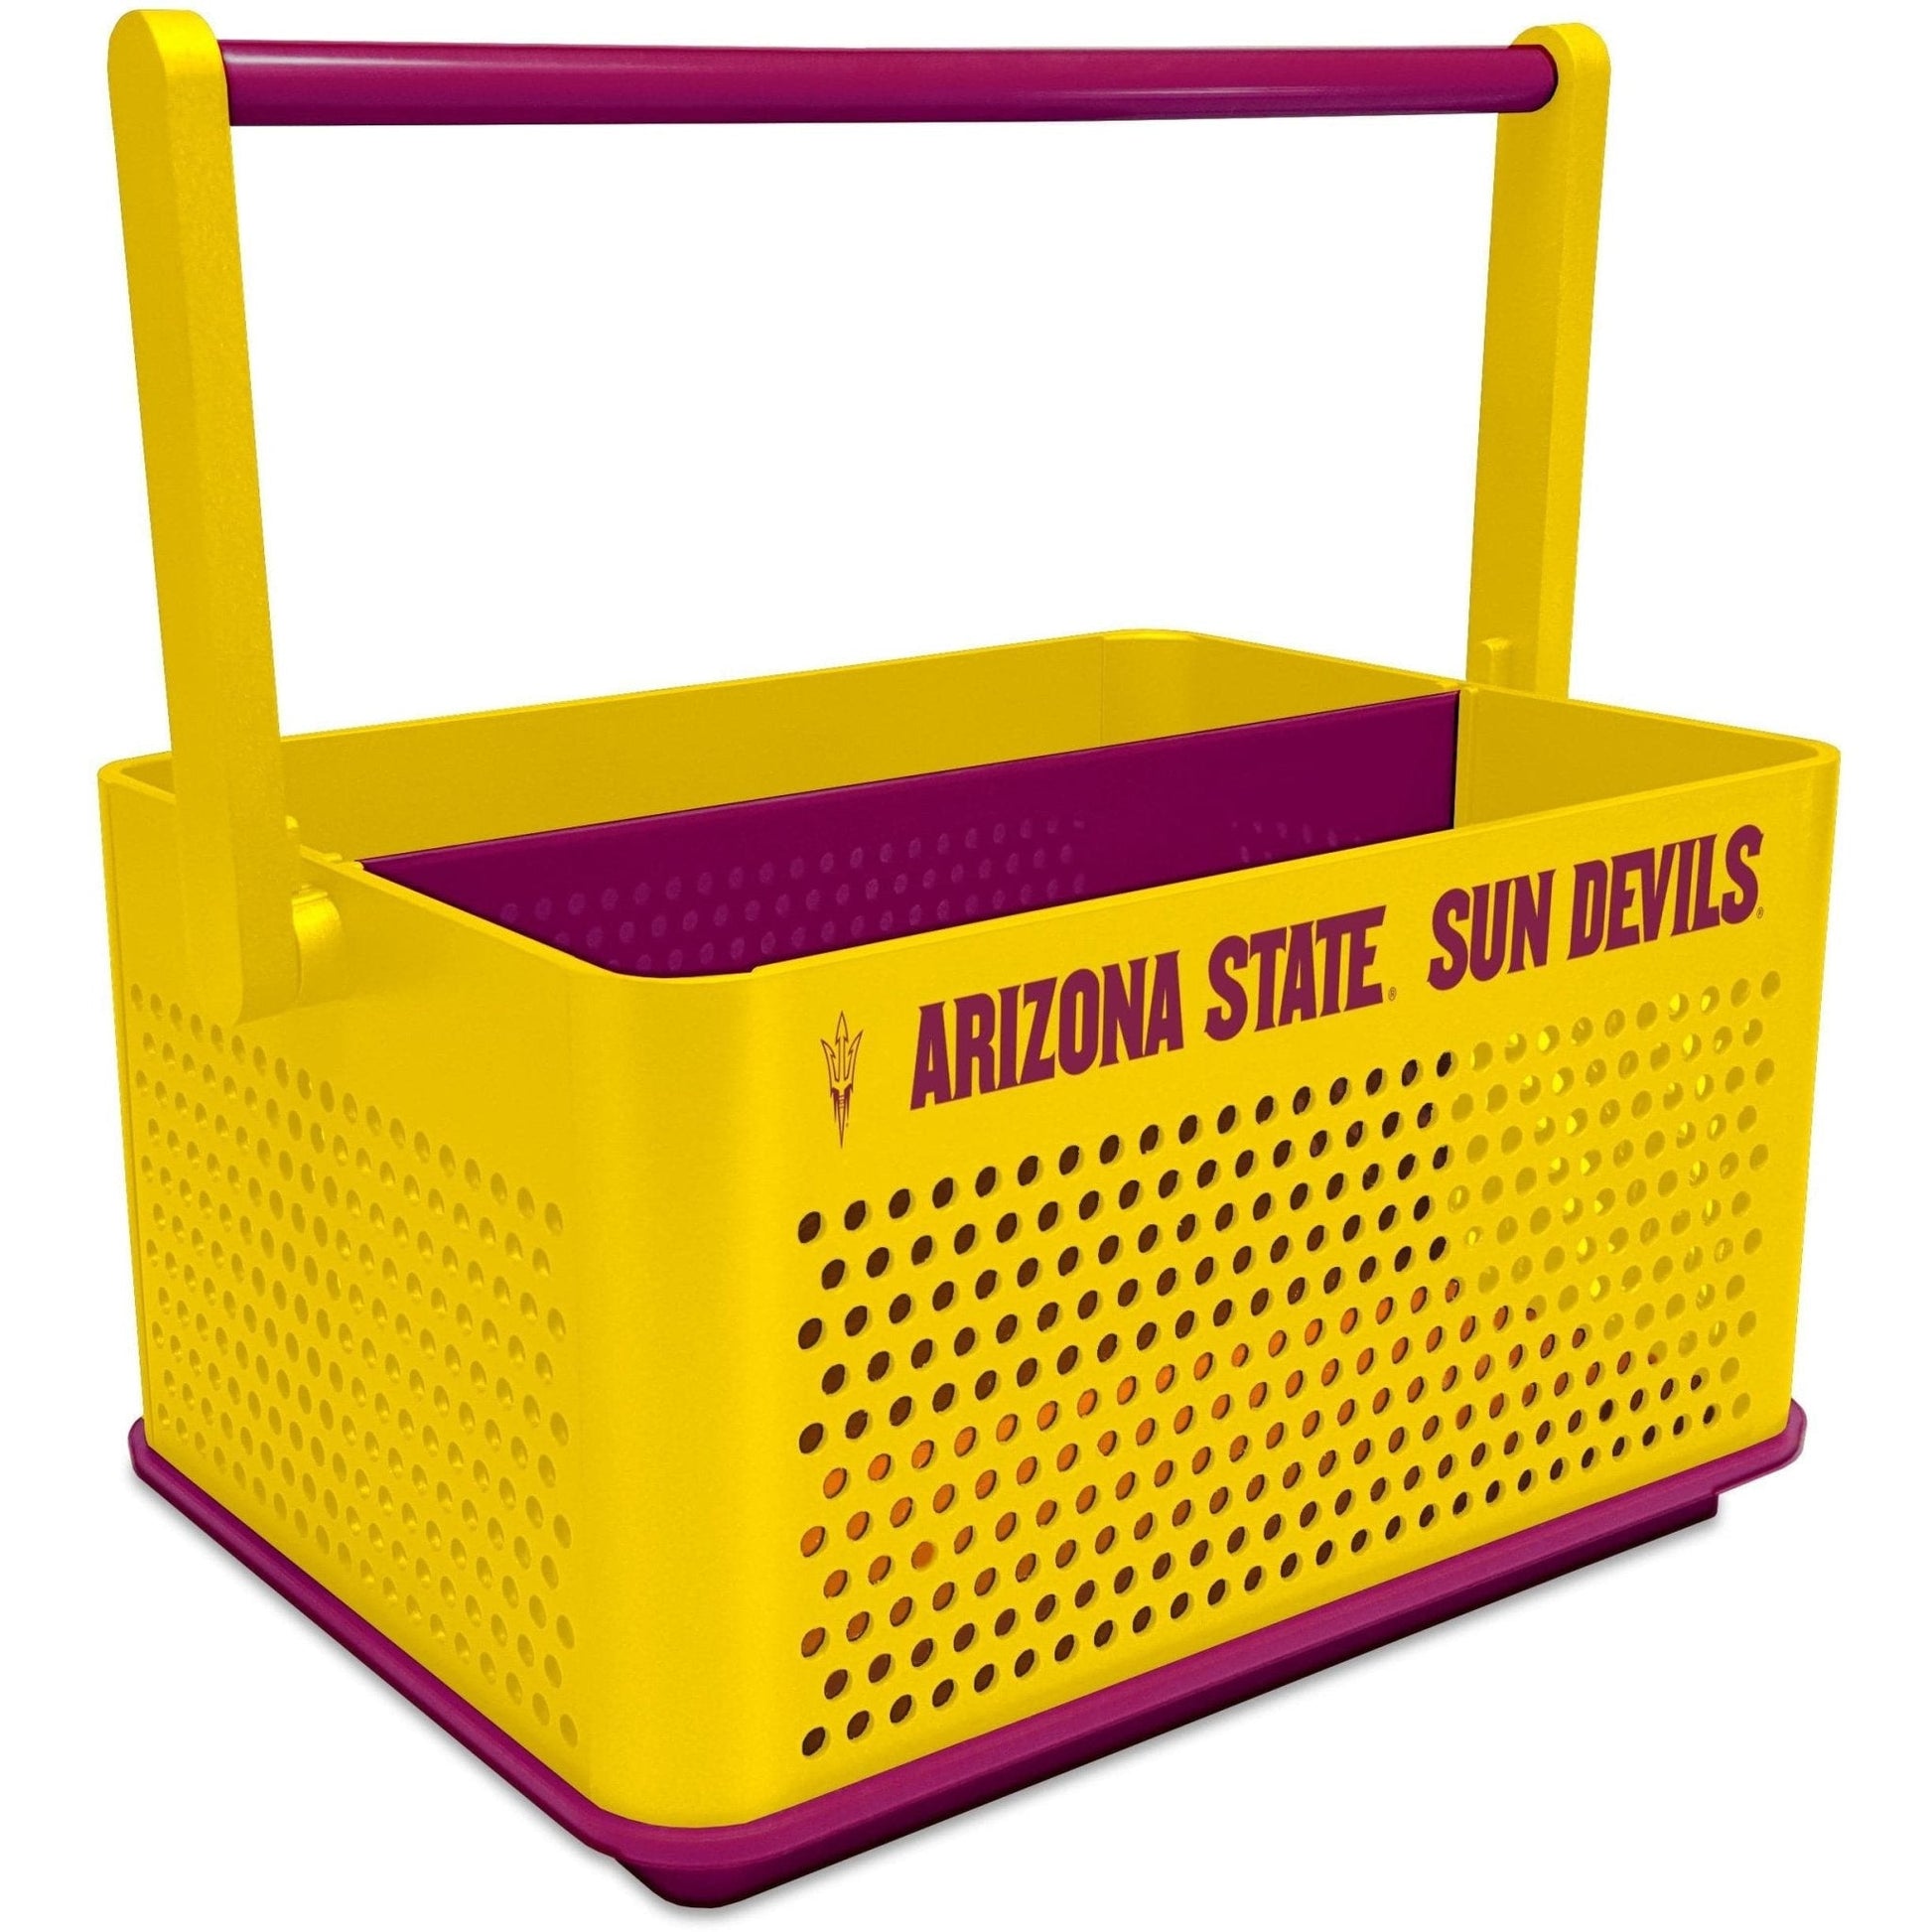 Arizona State Sun Devils: Tailgate Caddy - The Fan-Brand